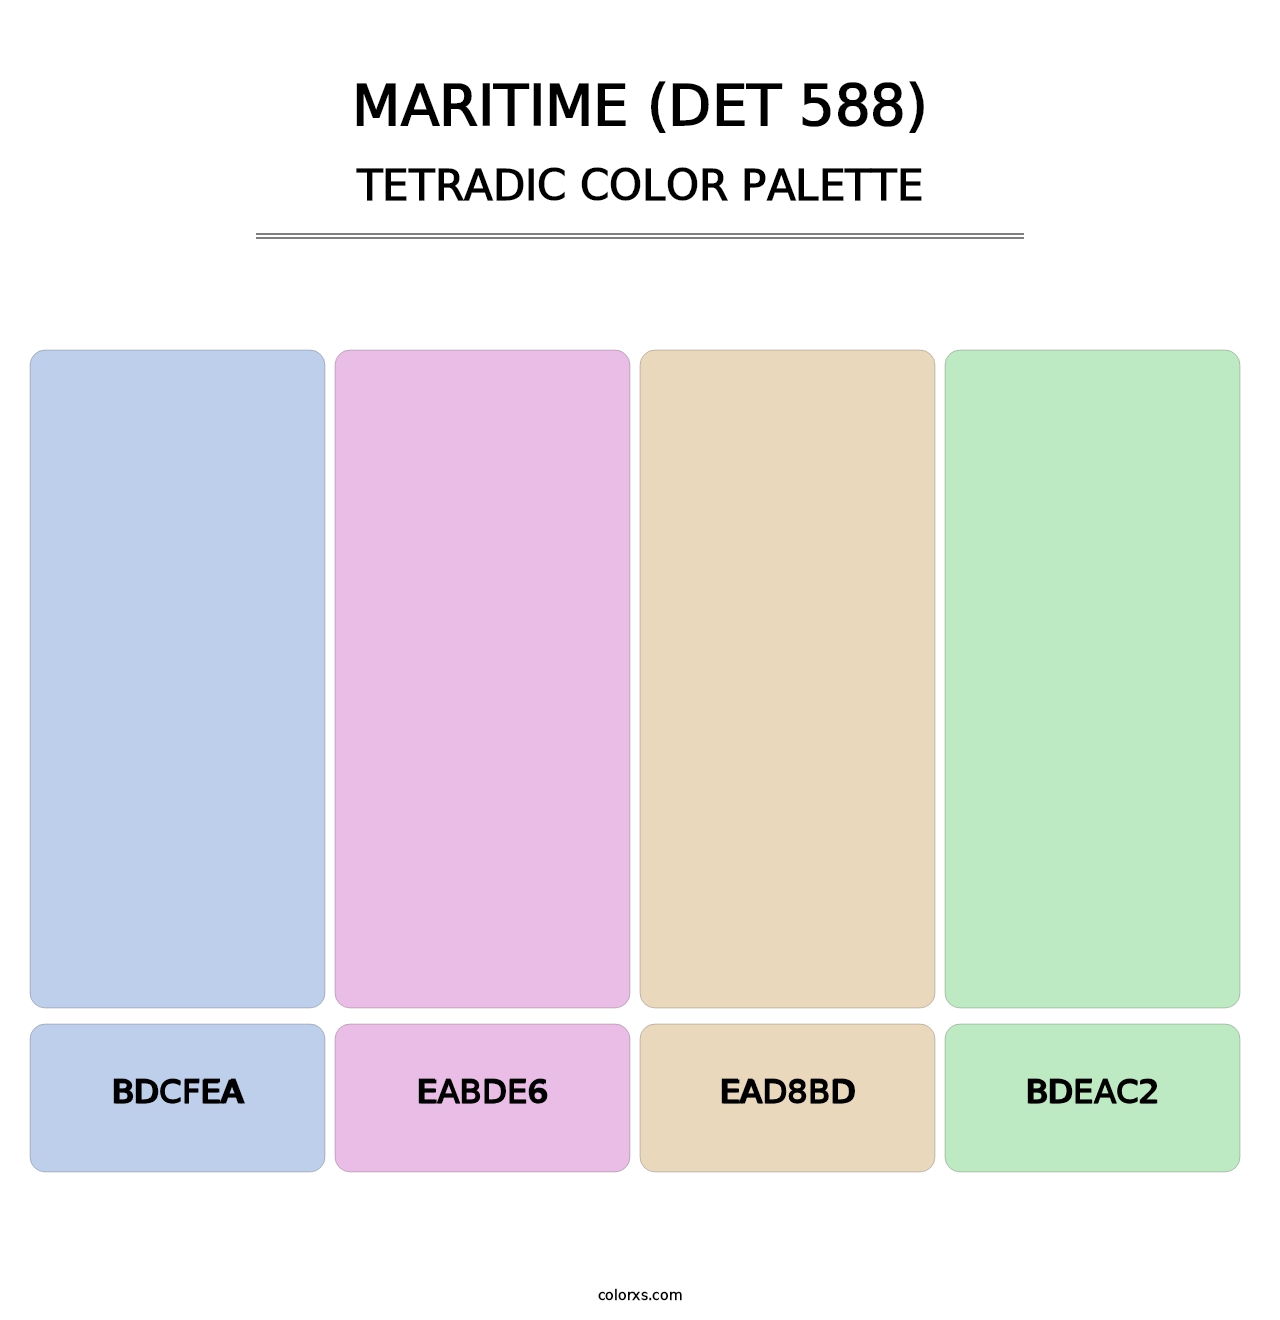 Maritime (DET 588) - Tetradic Color Palette